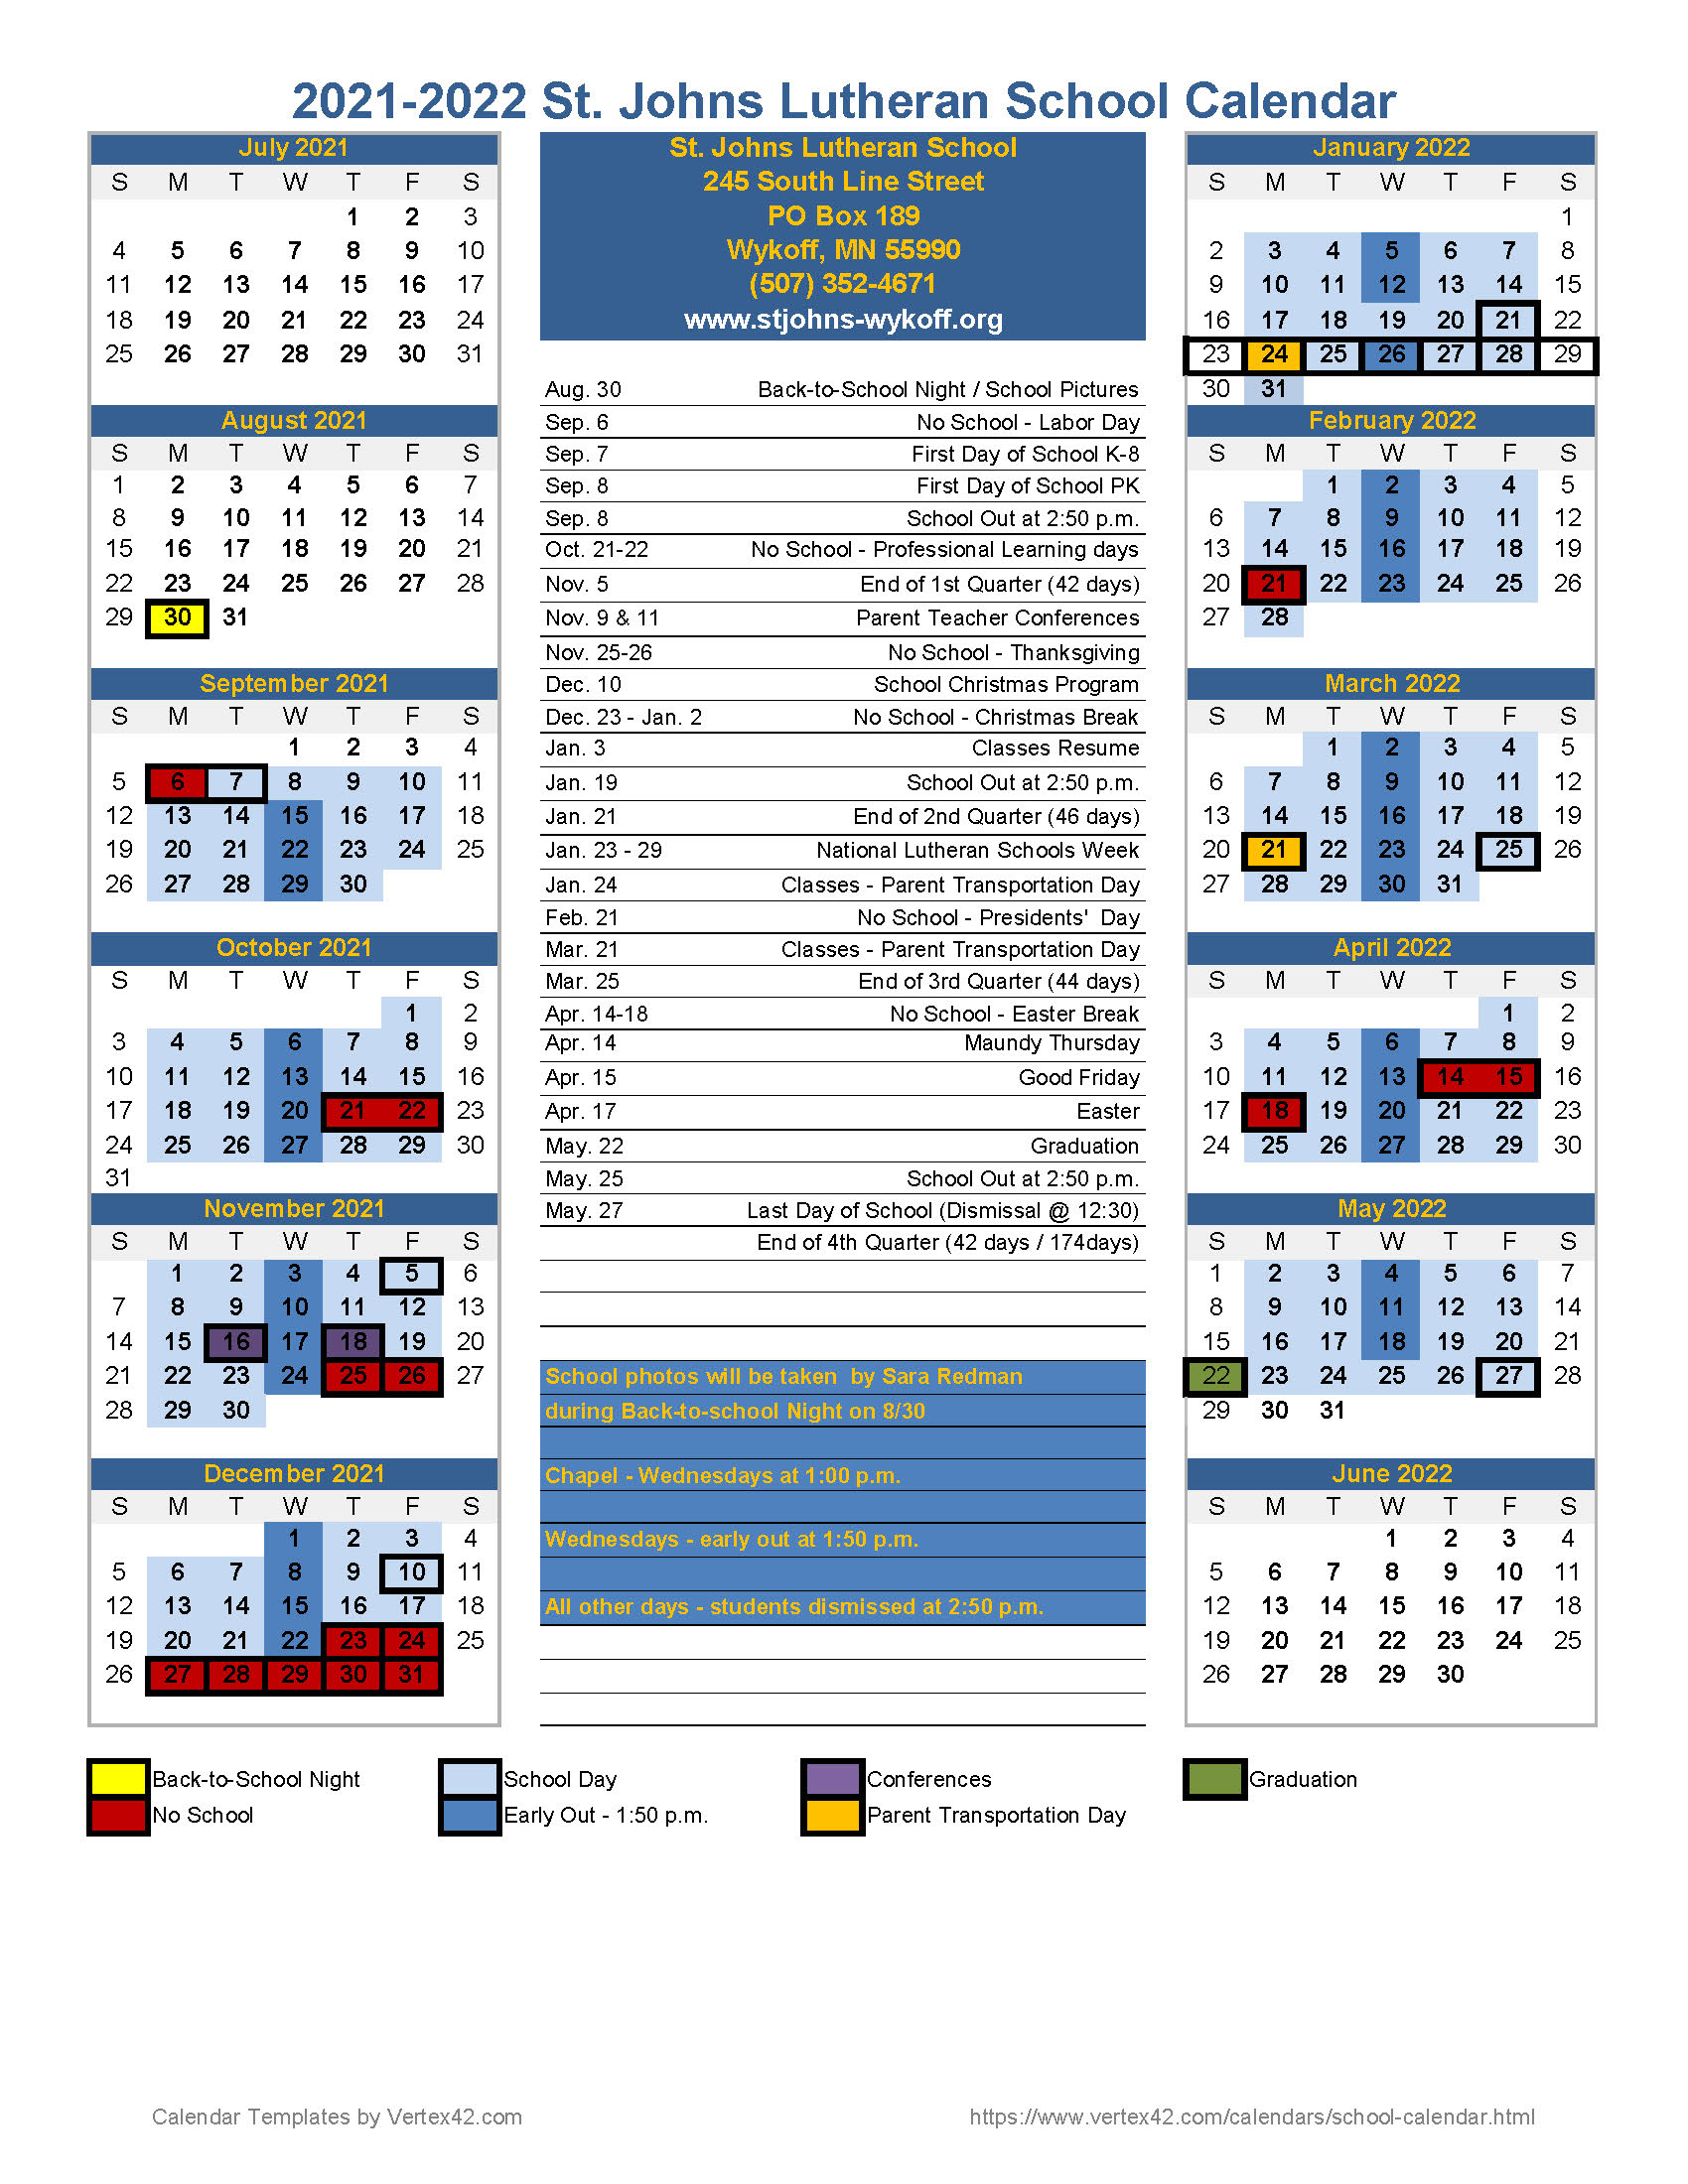 Charlotte Public School Calendar 2022 2022 - Schoolcalendars.net